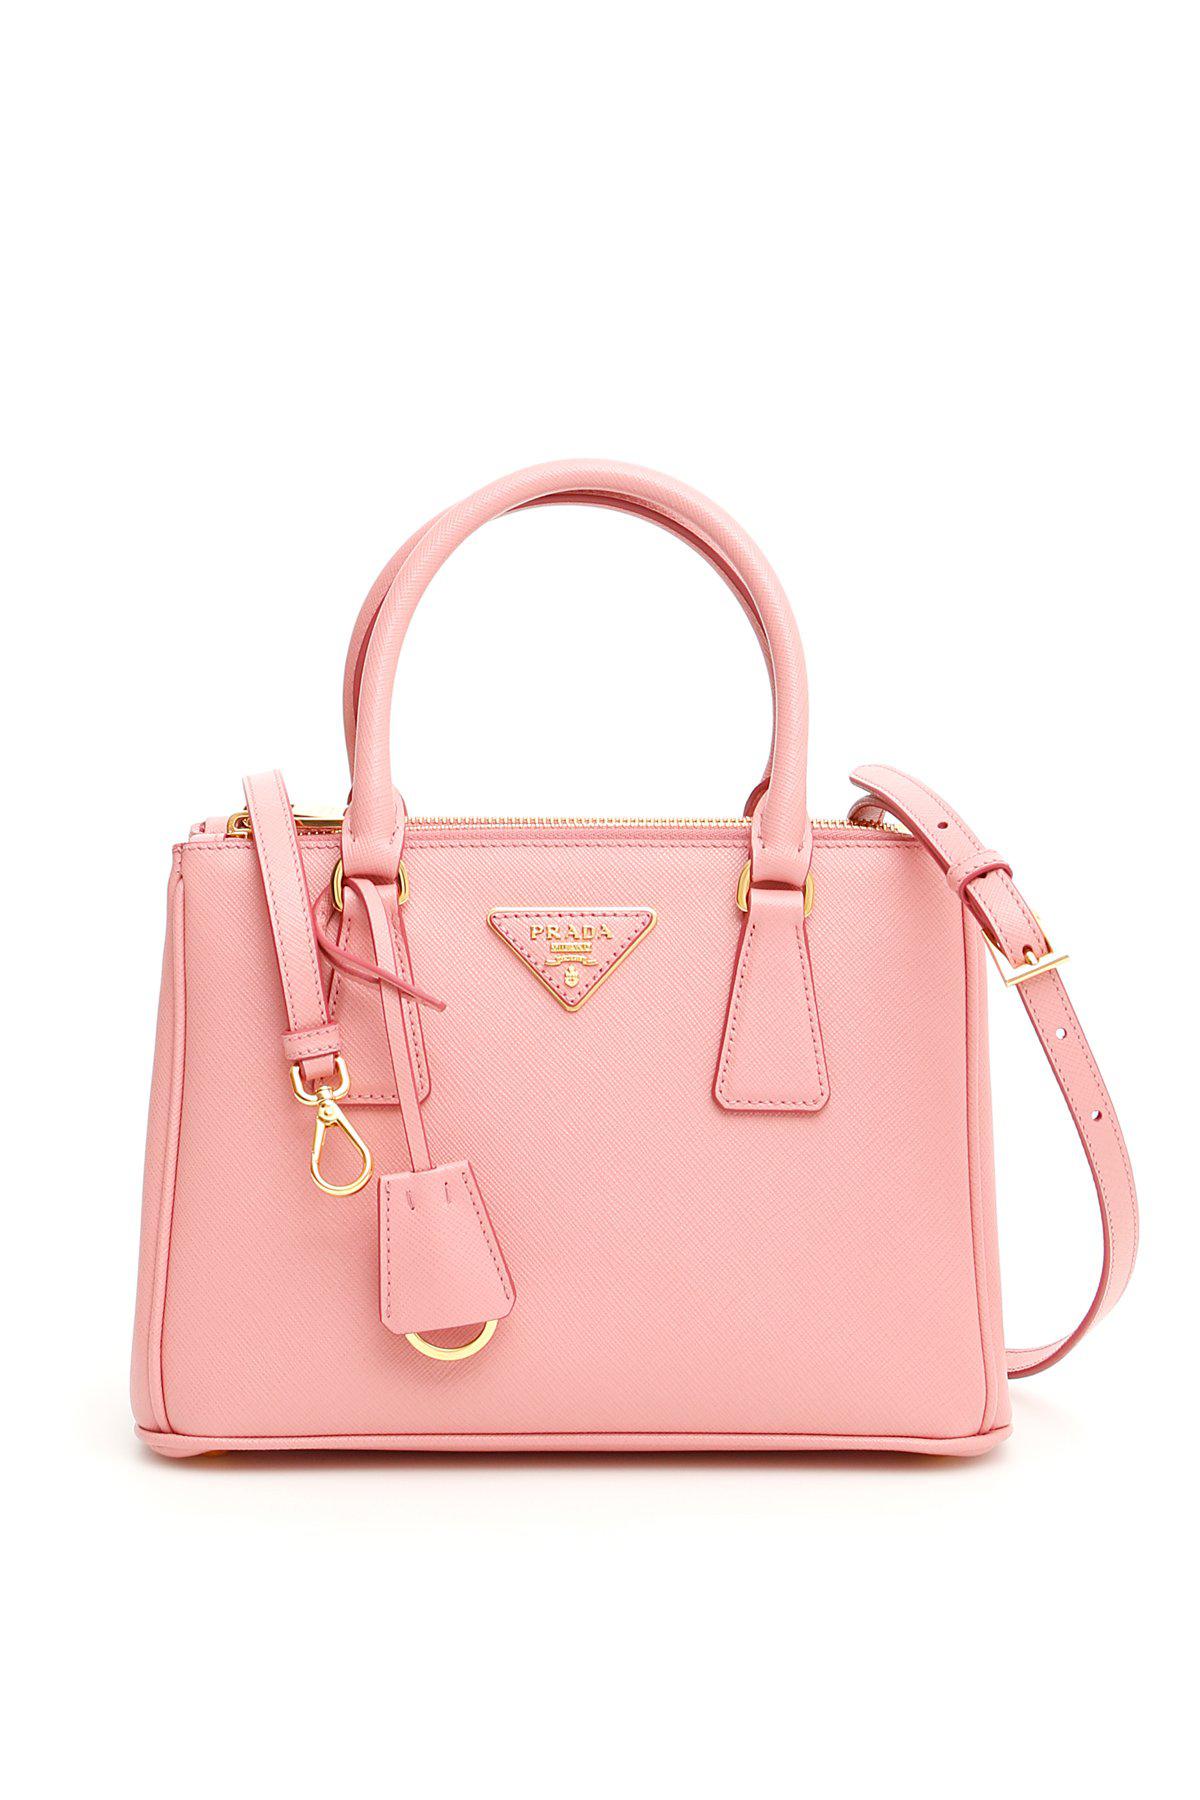 Prada Mini Galleria Tote Bag in Pink | Lyst